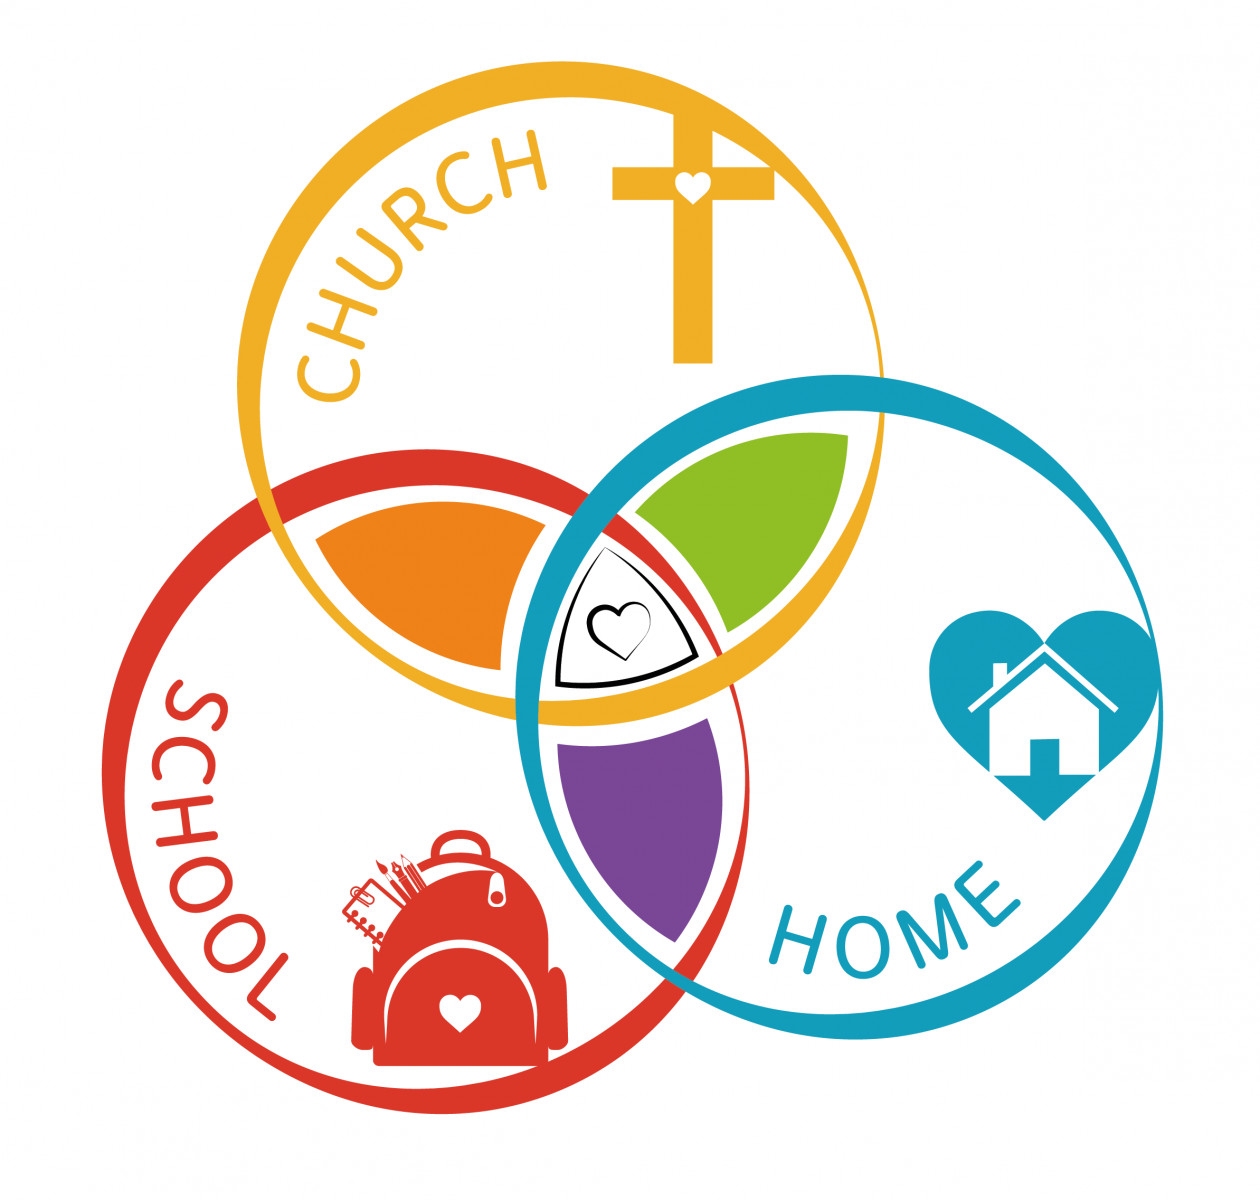 Church, Home and School logo